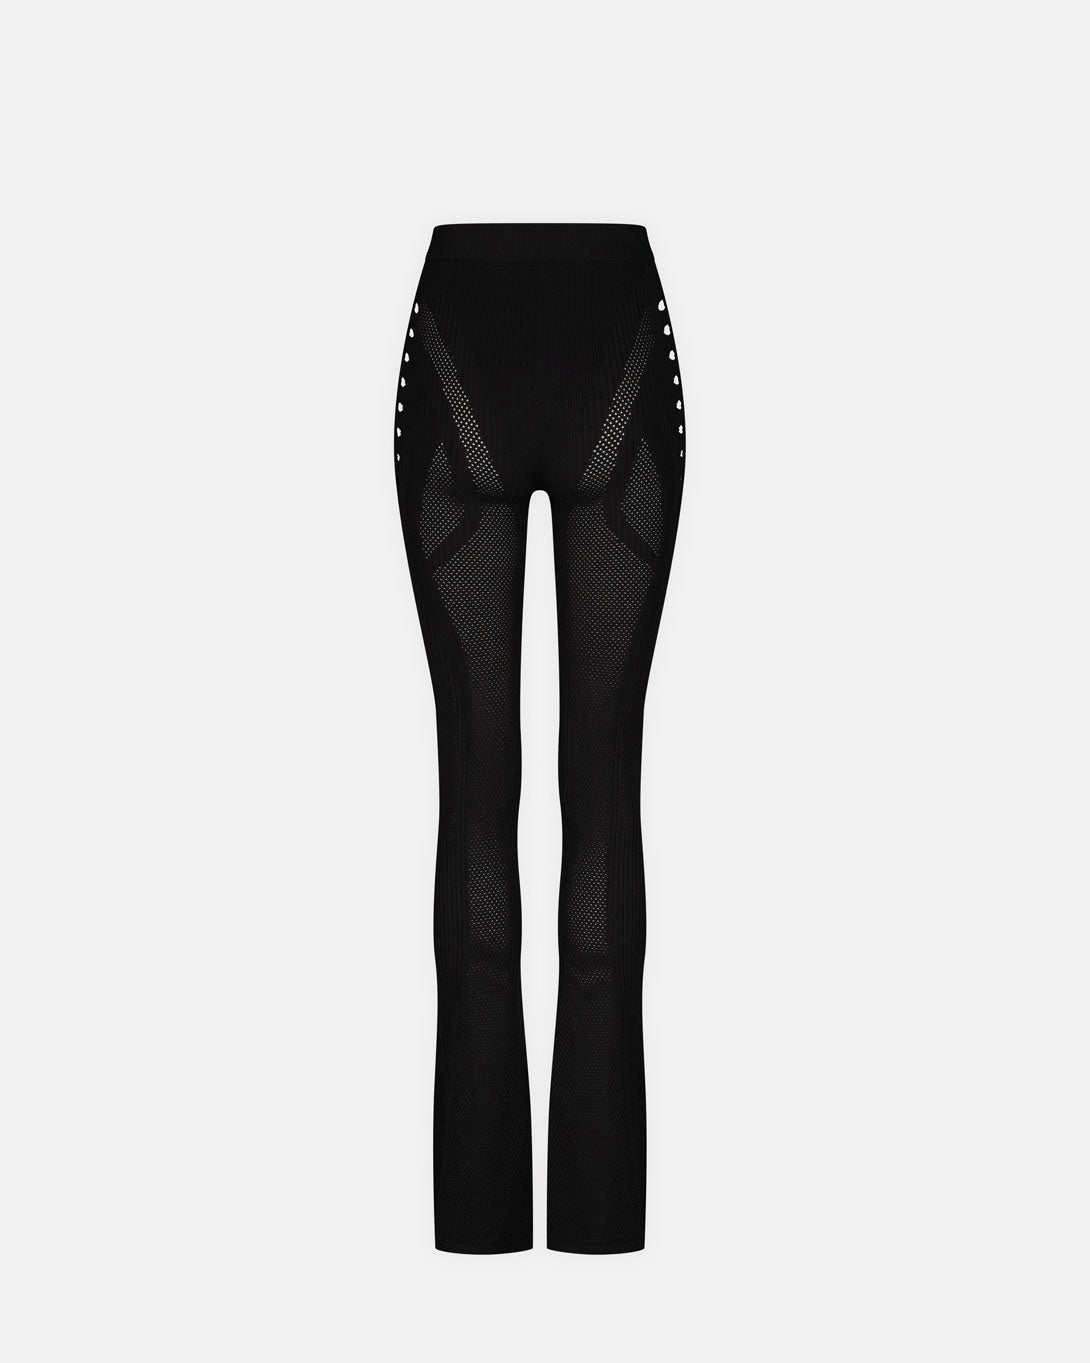 Future Sport Mesh Trousers Black - Pants - MISBHV - Elevastor